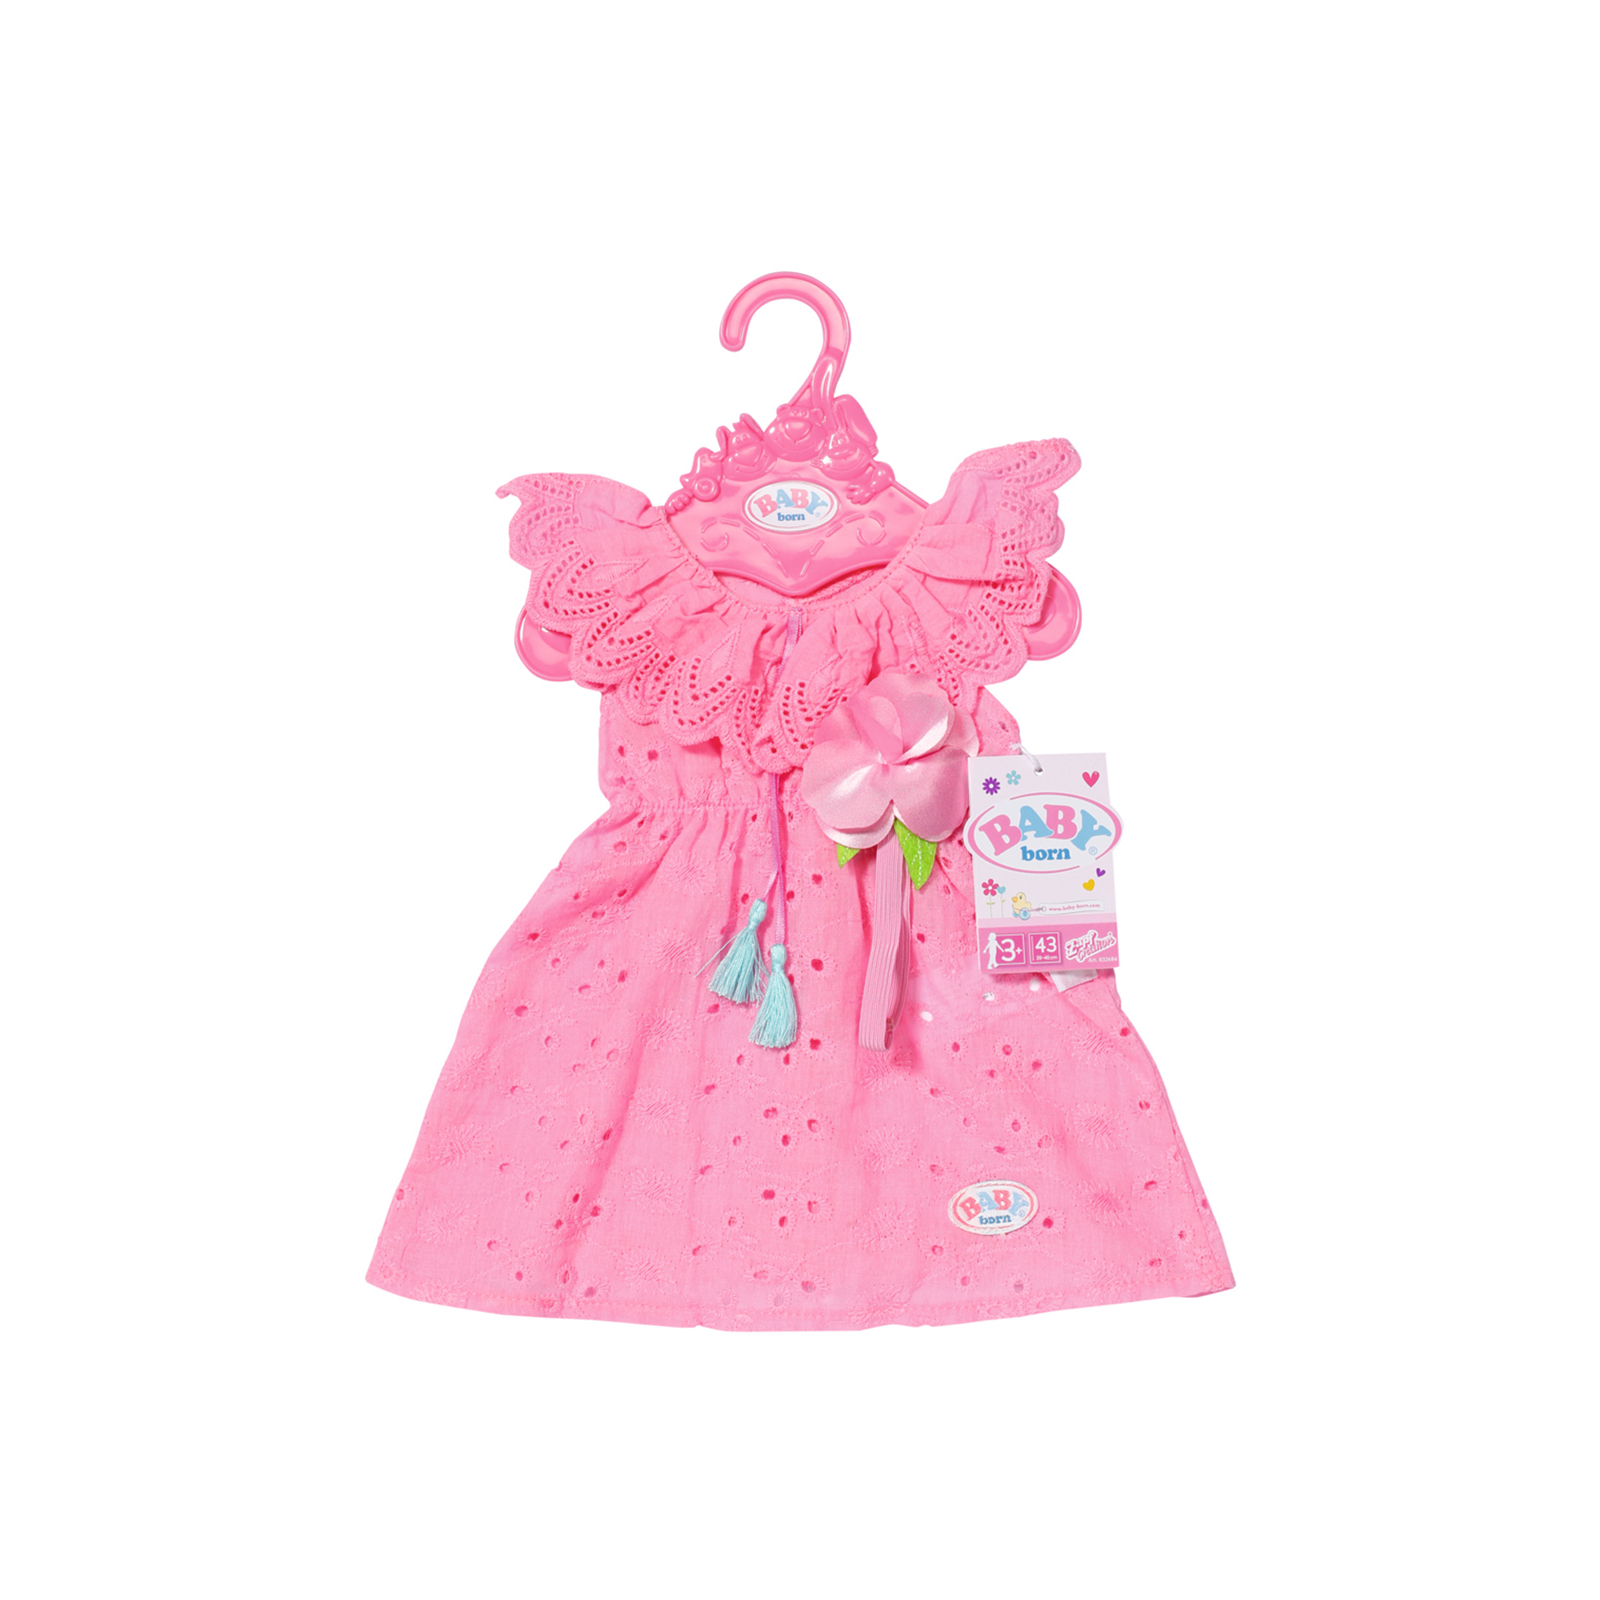 Аксессуар к кукле Zapf Одежда для куклы Baby Born Платье Фантазия 43 см (832684) изображение 2